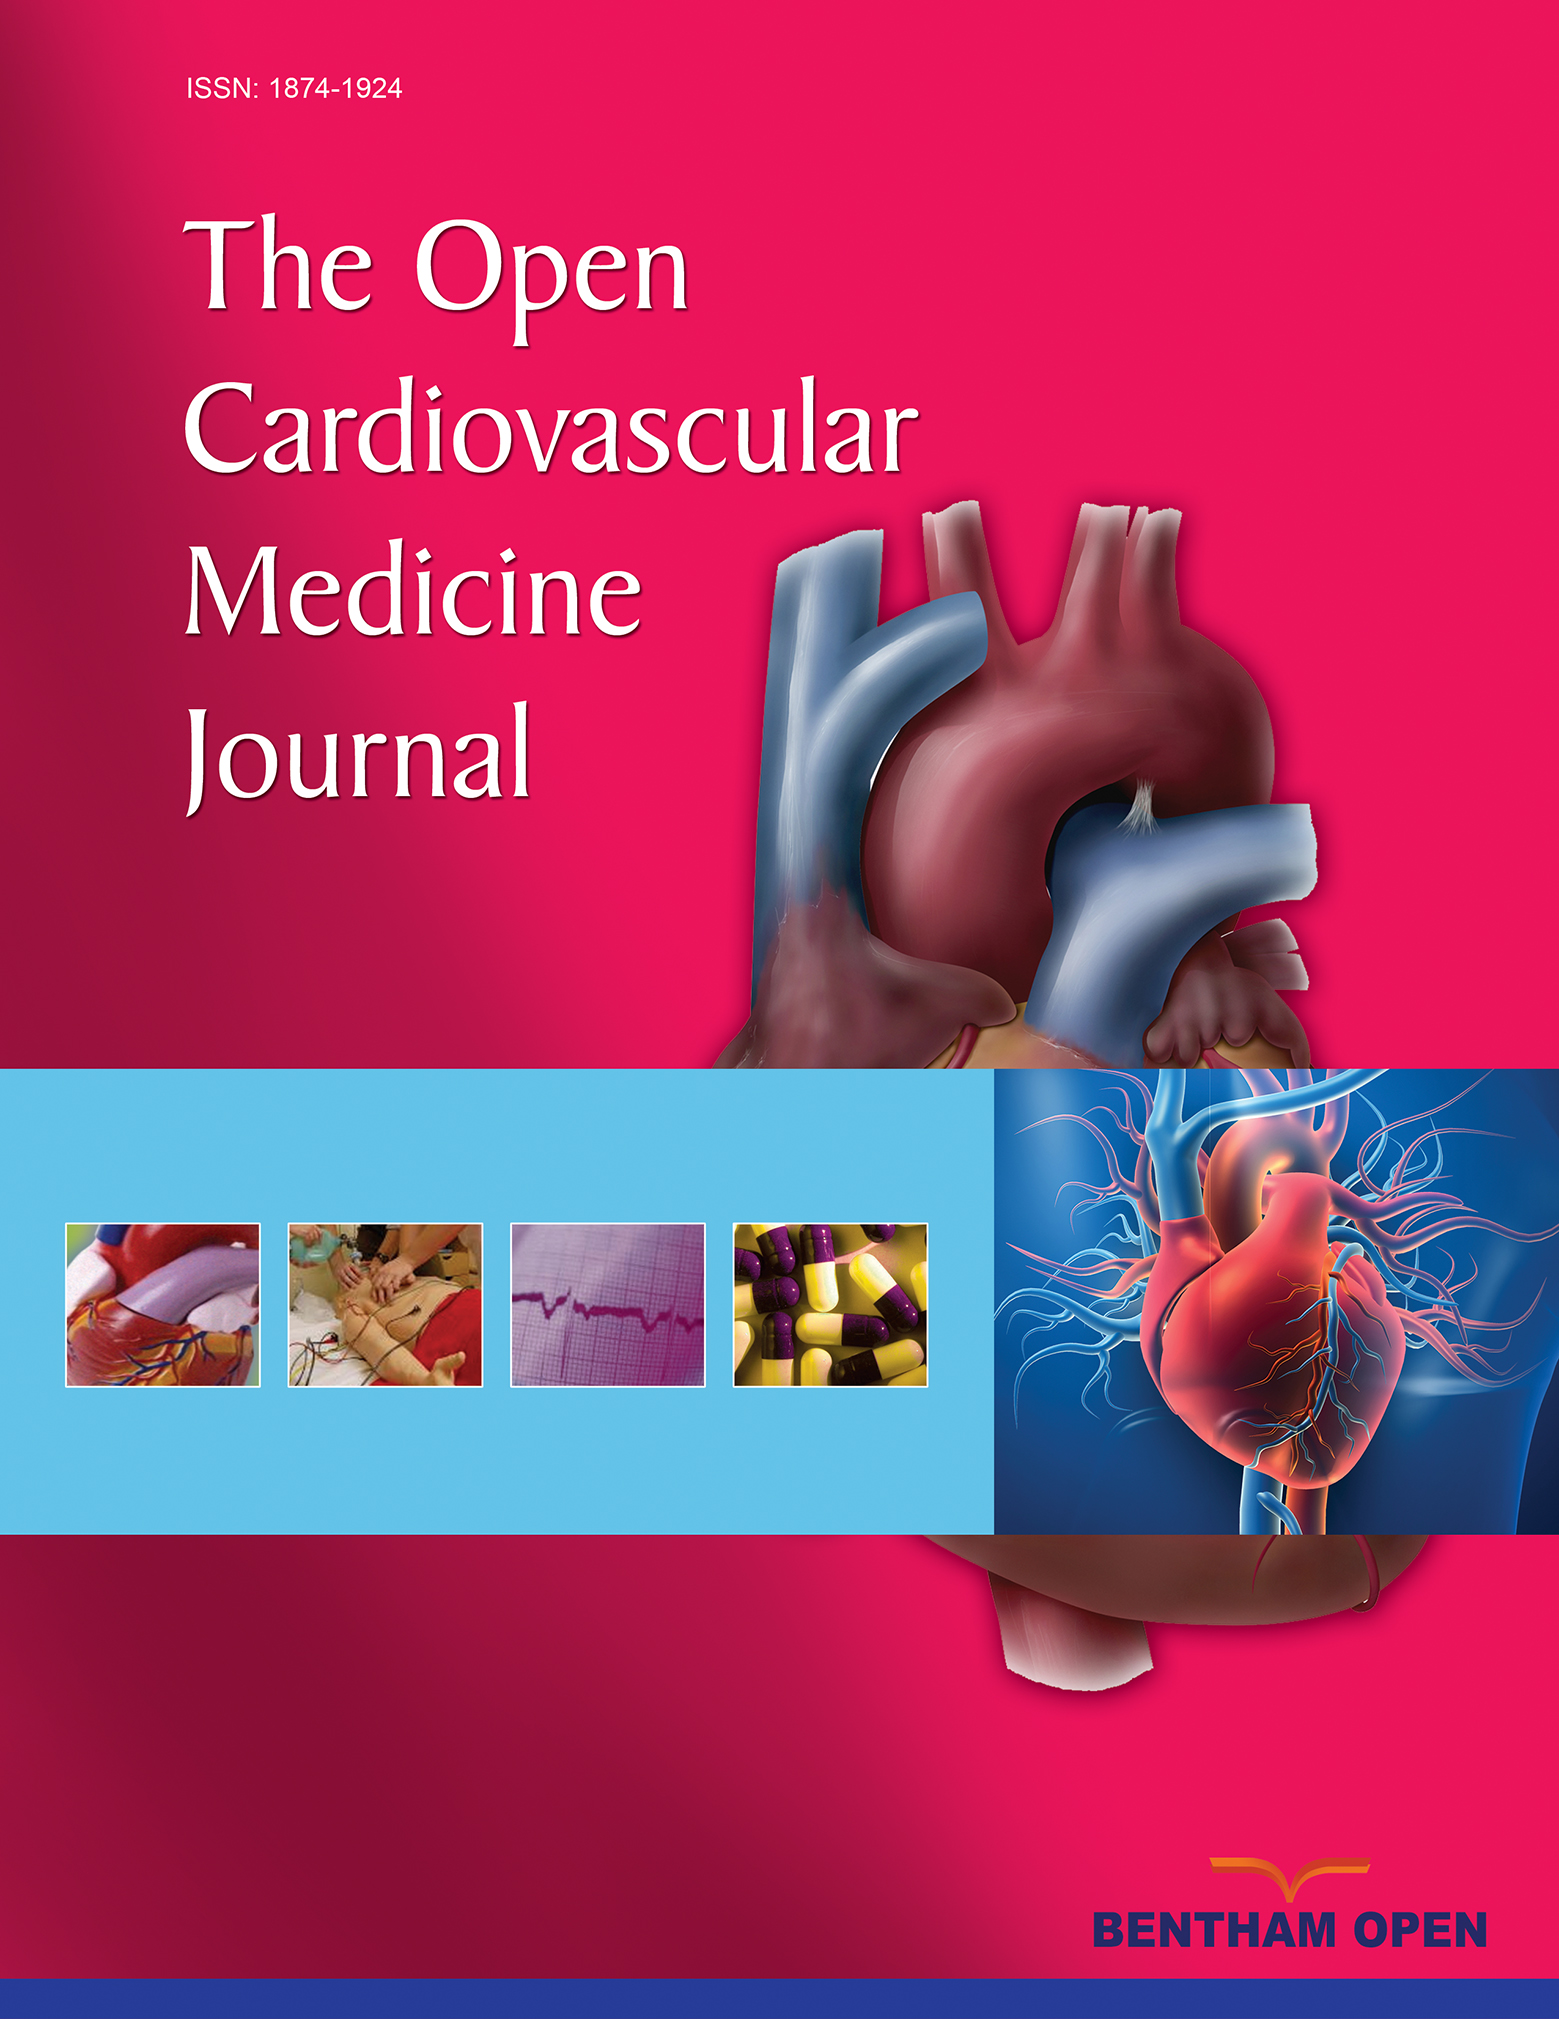 The Open Cardiovascular Medicine Journal